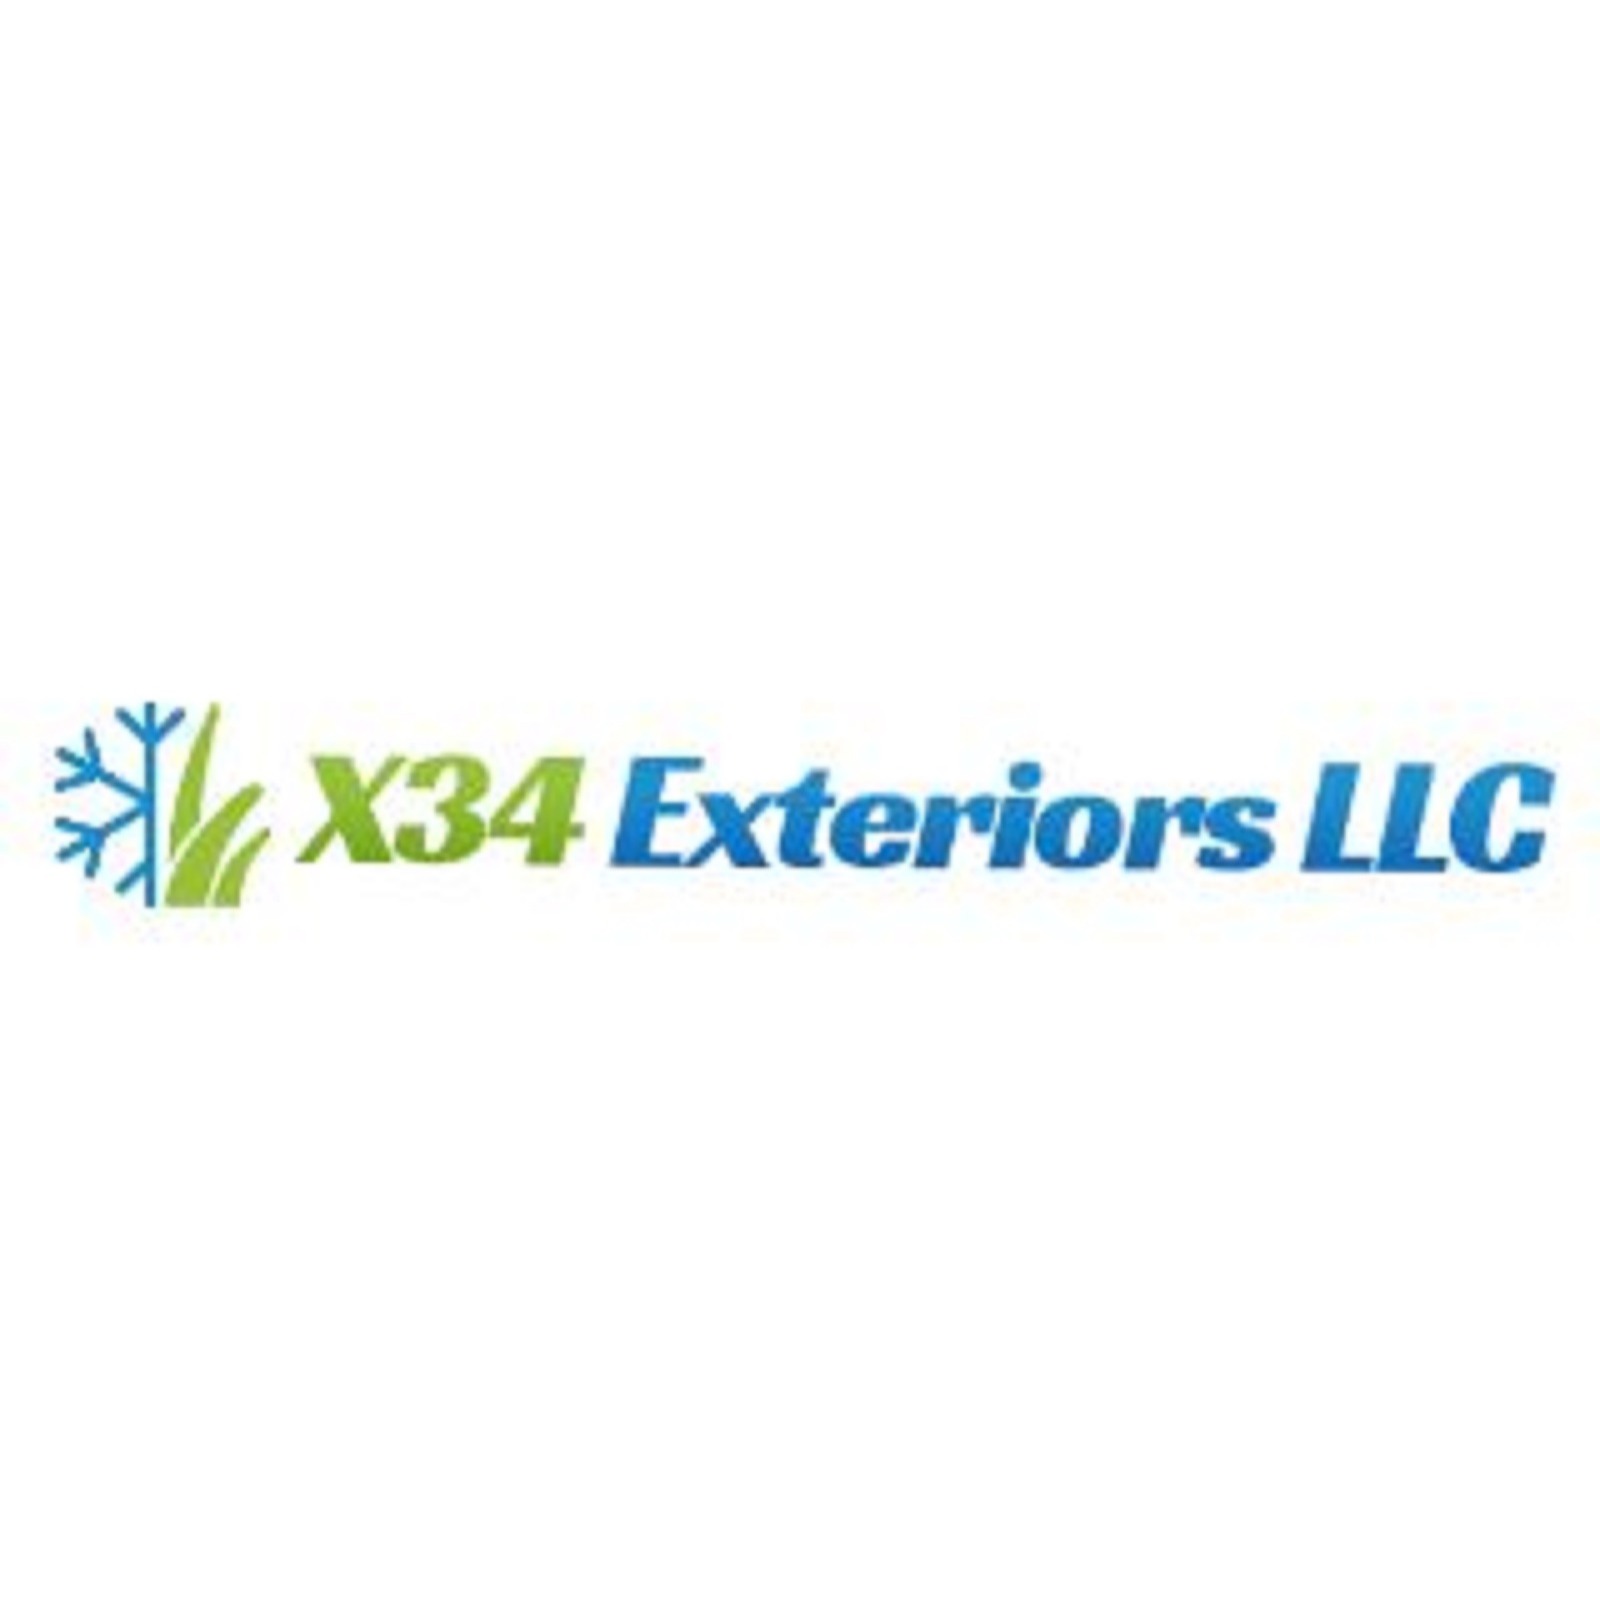 X34 Exteriors LLC Logo